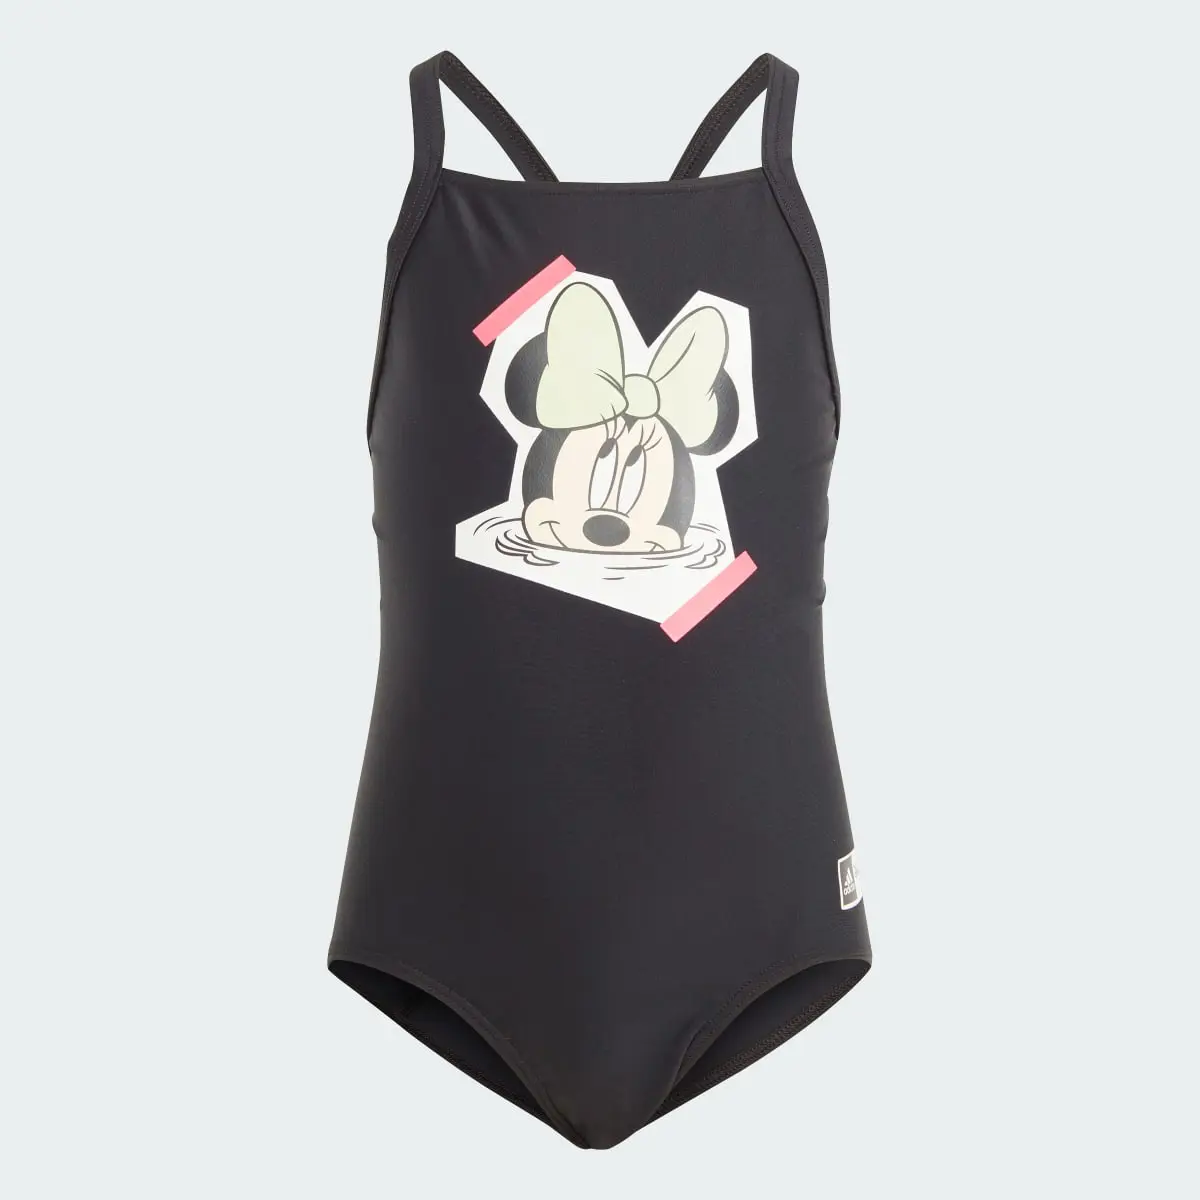 Adidas x Disney Minnie Mouse Swimsuit. 1